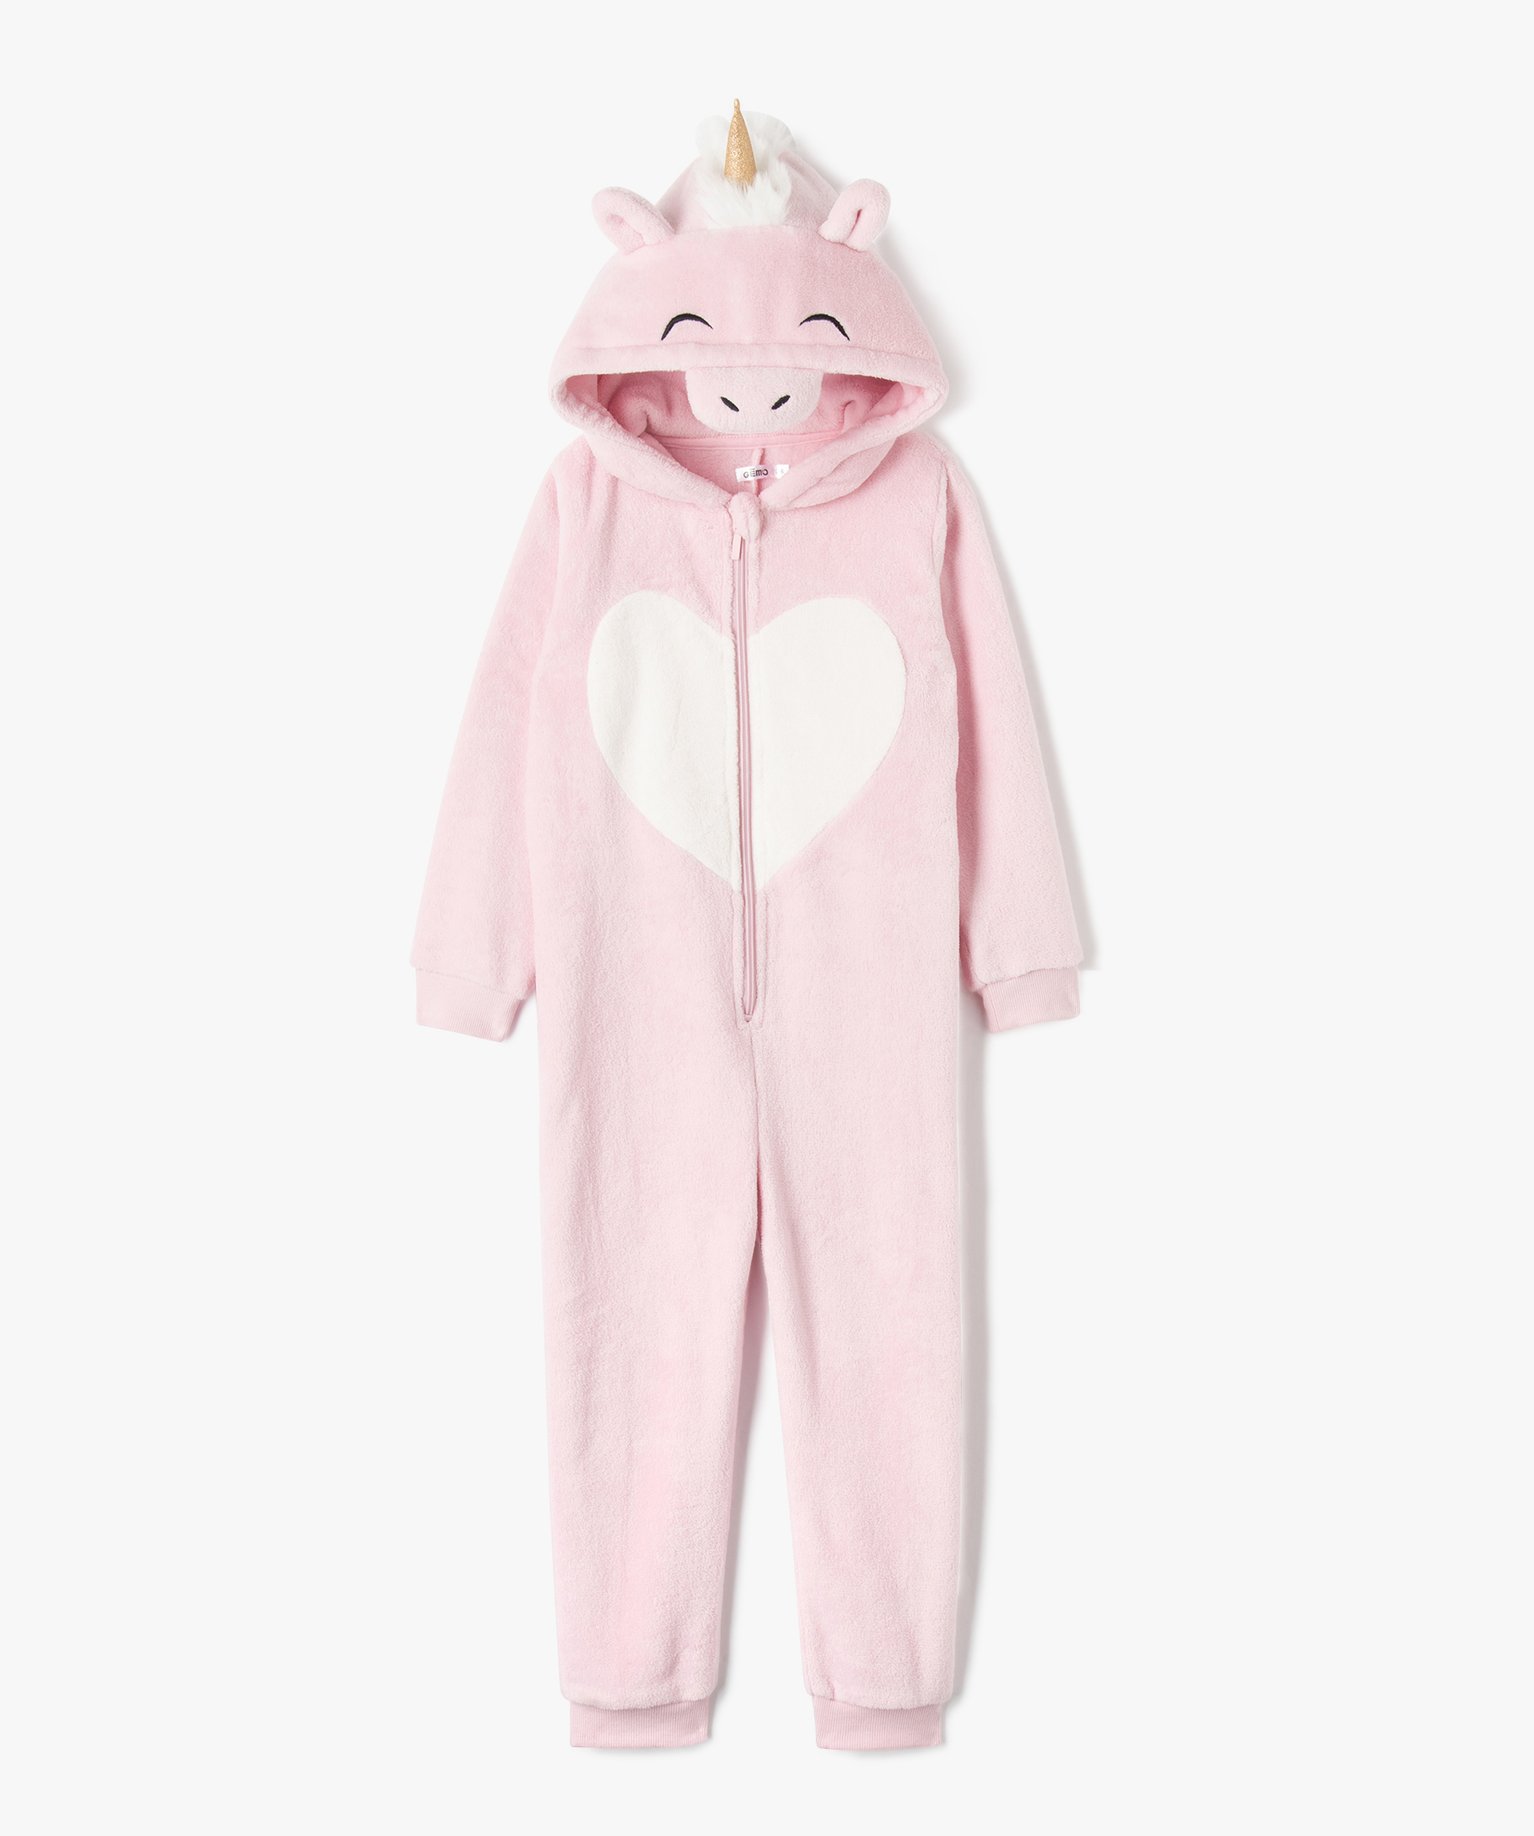 combinaison pyjama fille licorne avec capuche rose